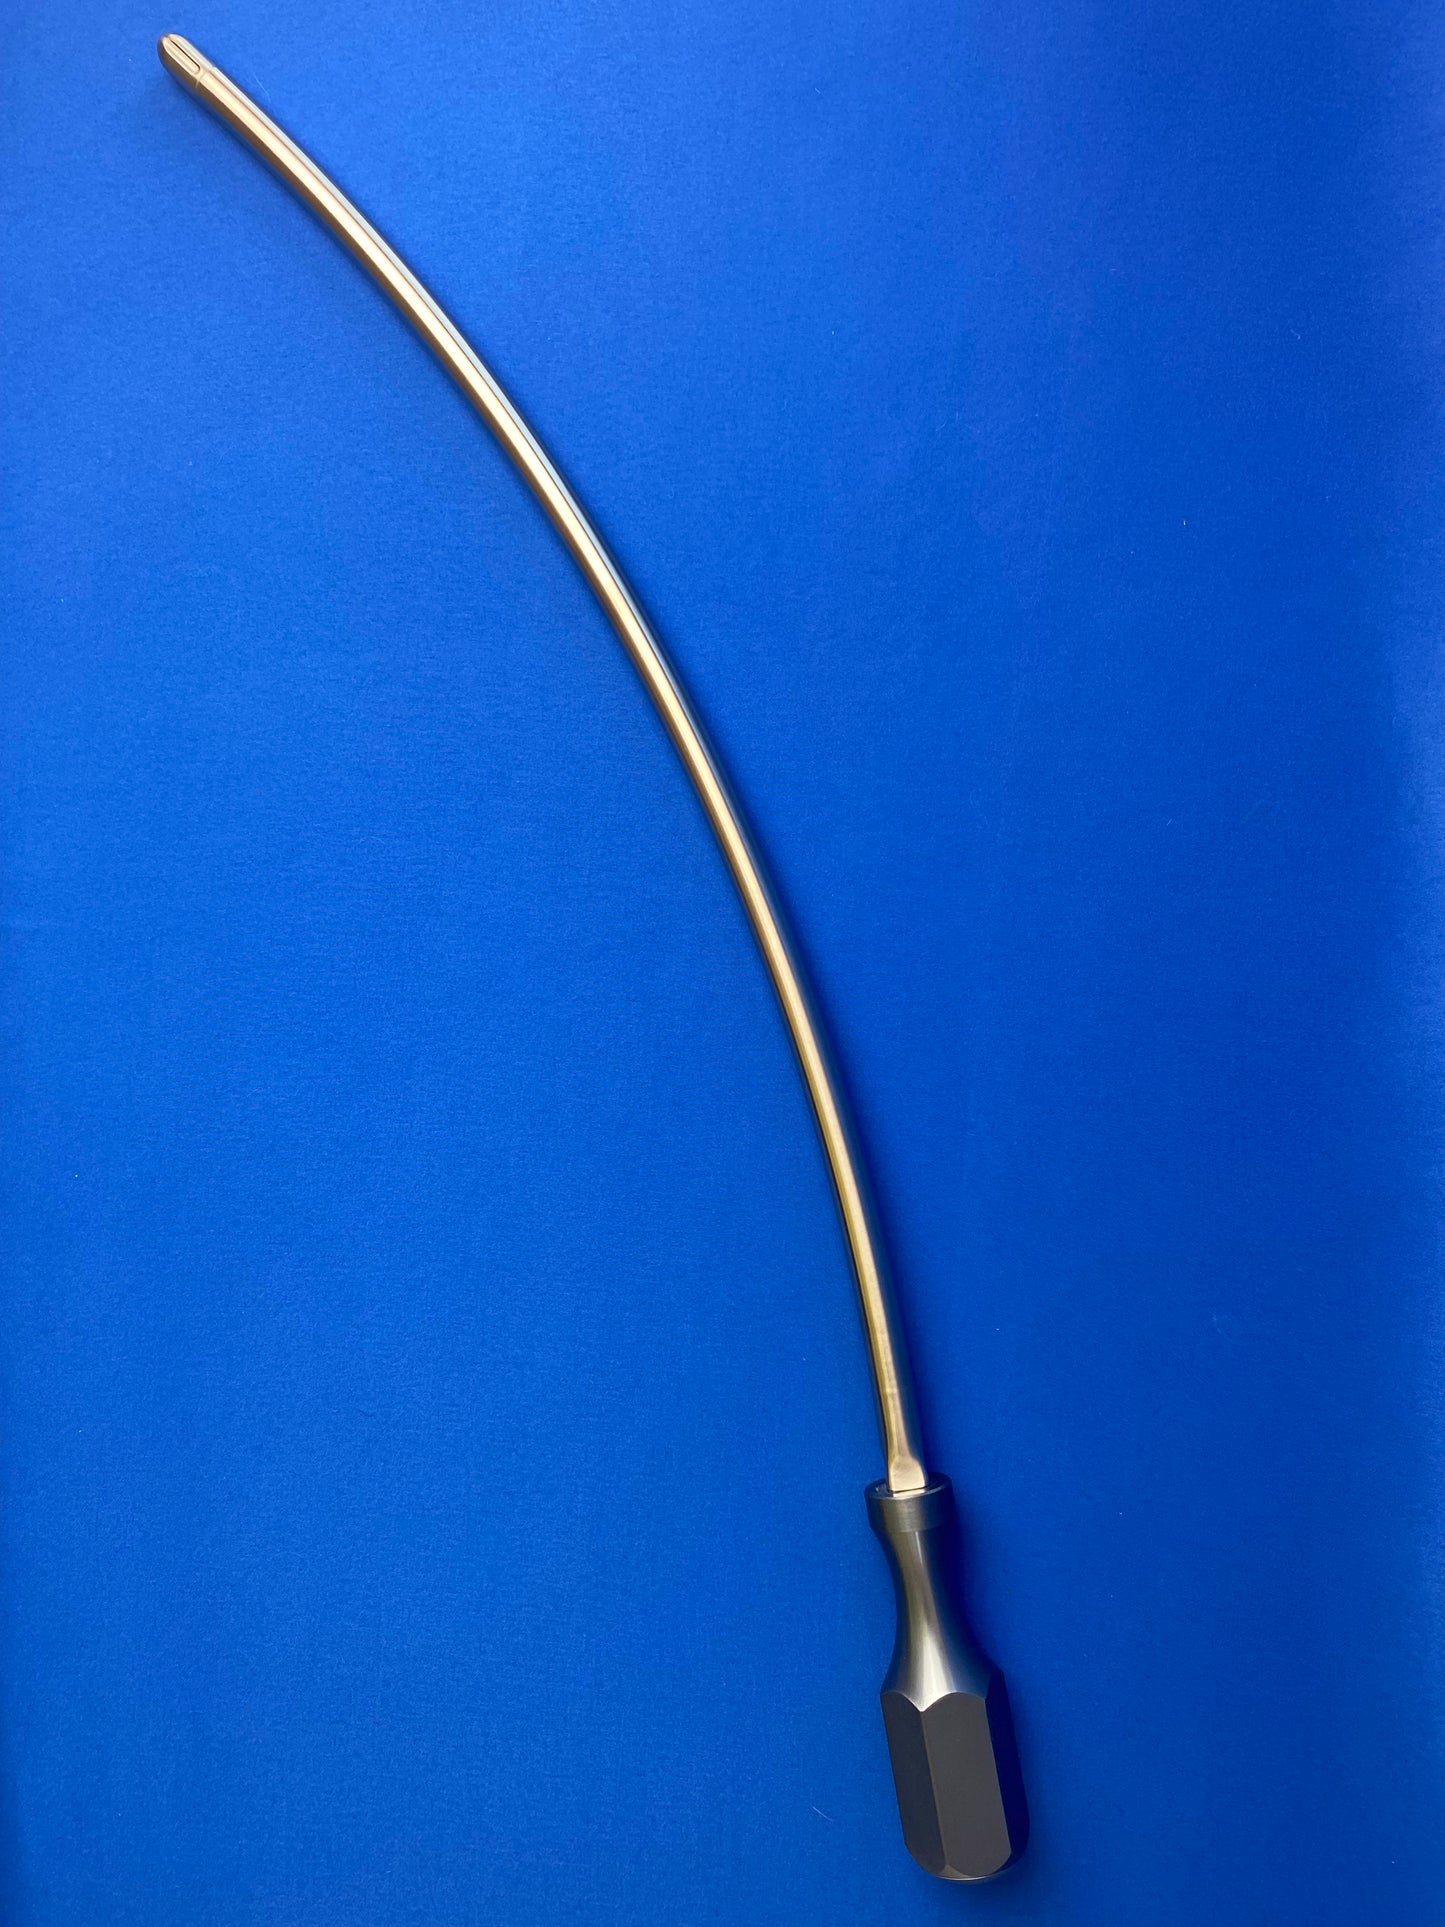 8mm x 50cm Slight Curve Vascular Tunneler